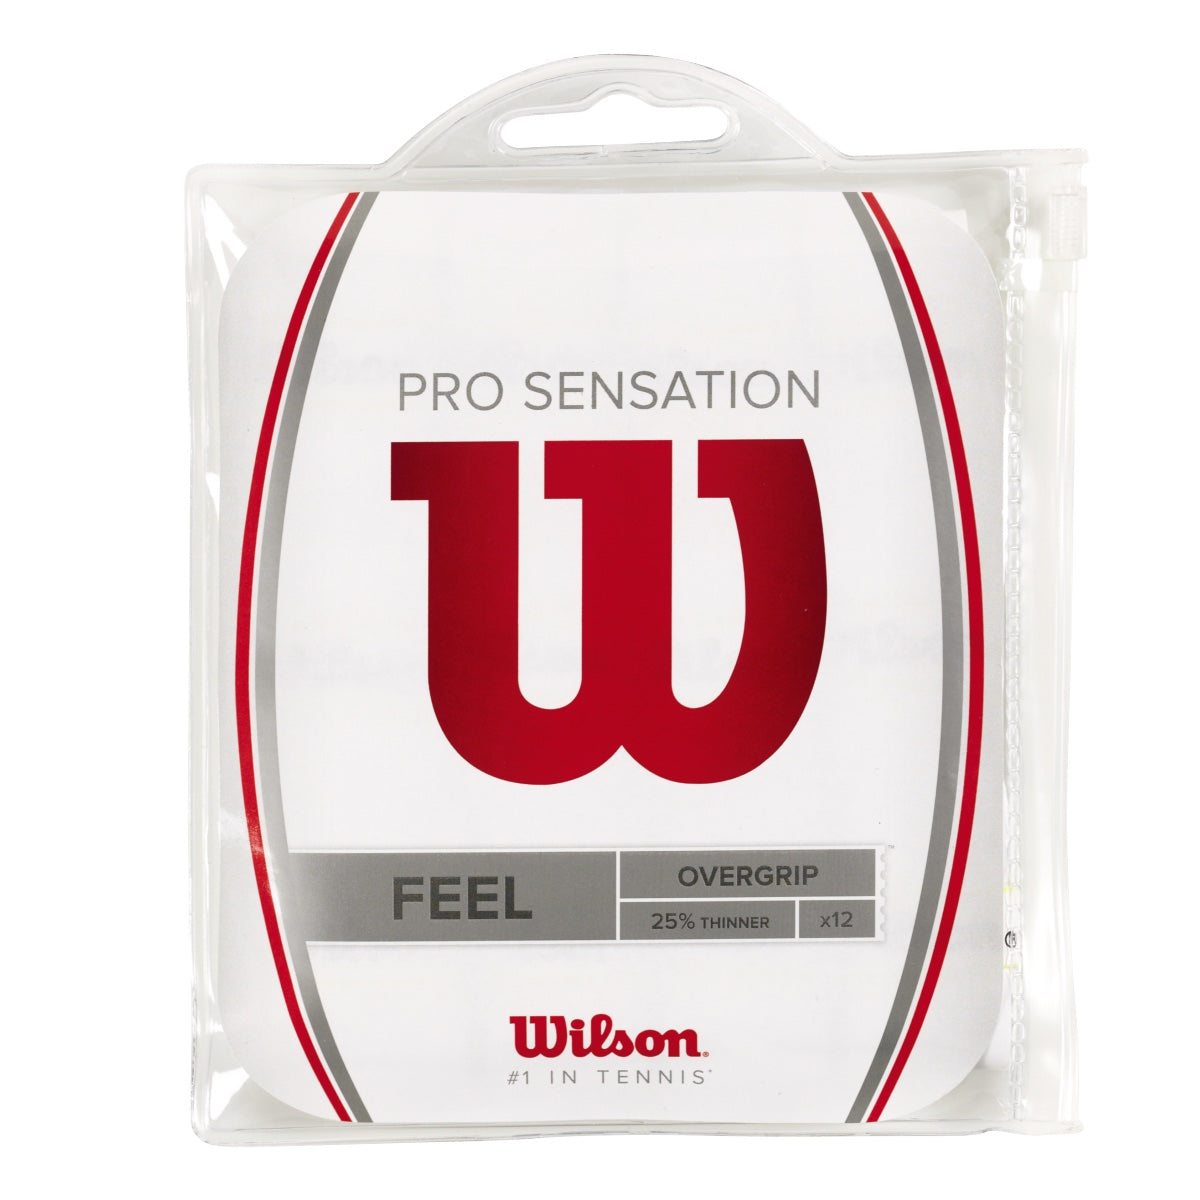 Wilson Pro Sensation 12-pack overgrip